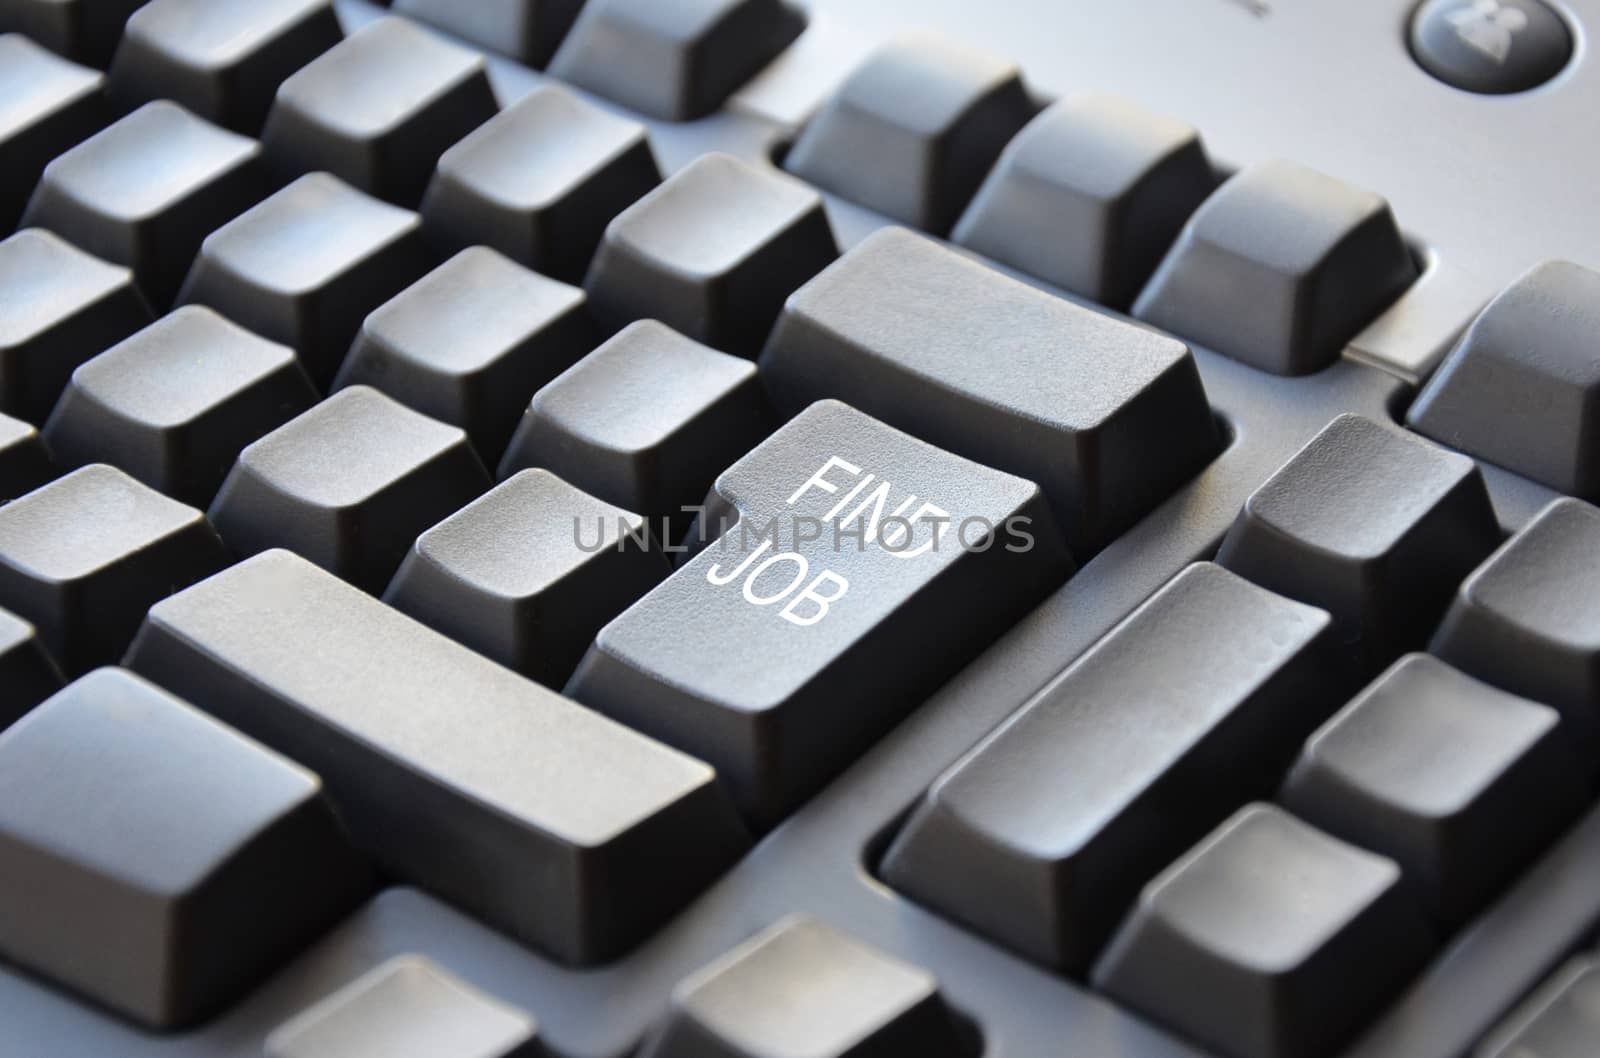 Keyboard Find Job